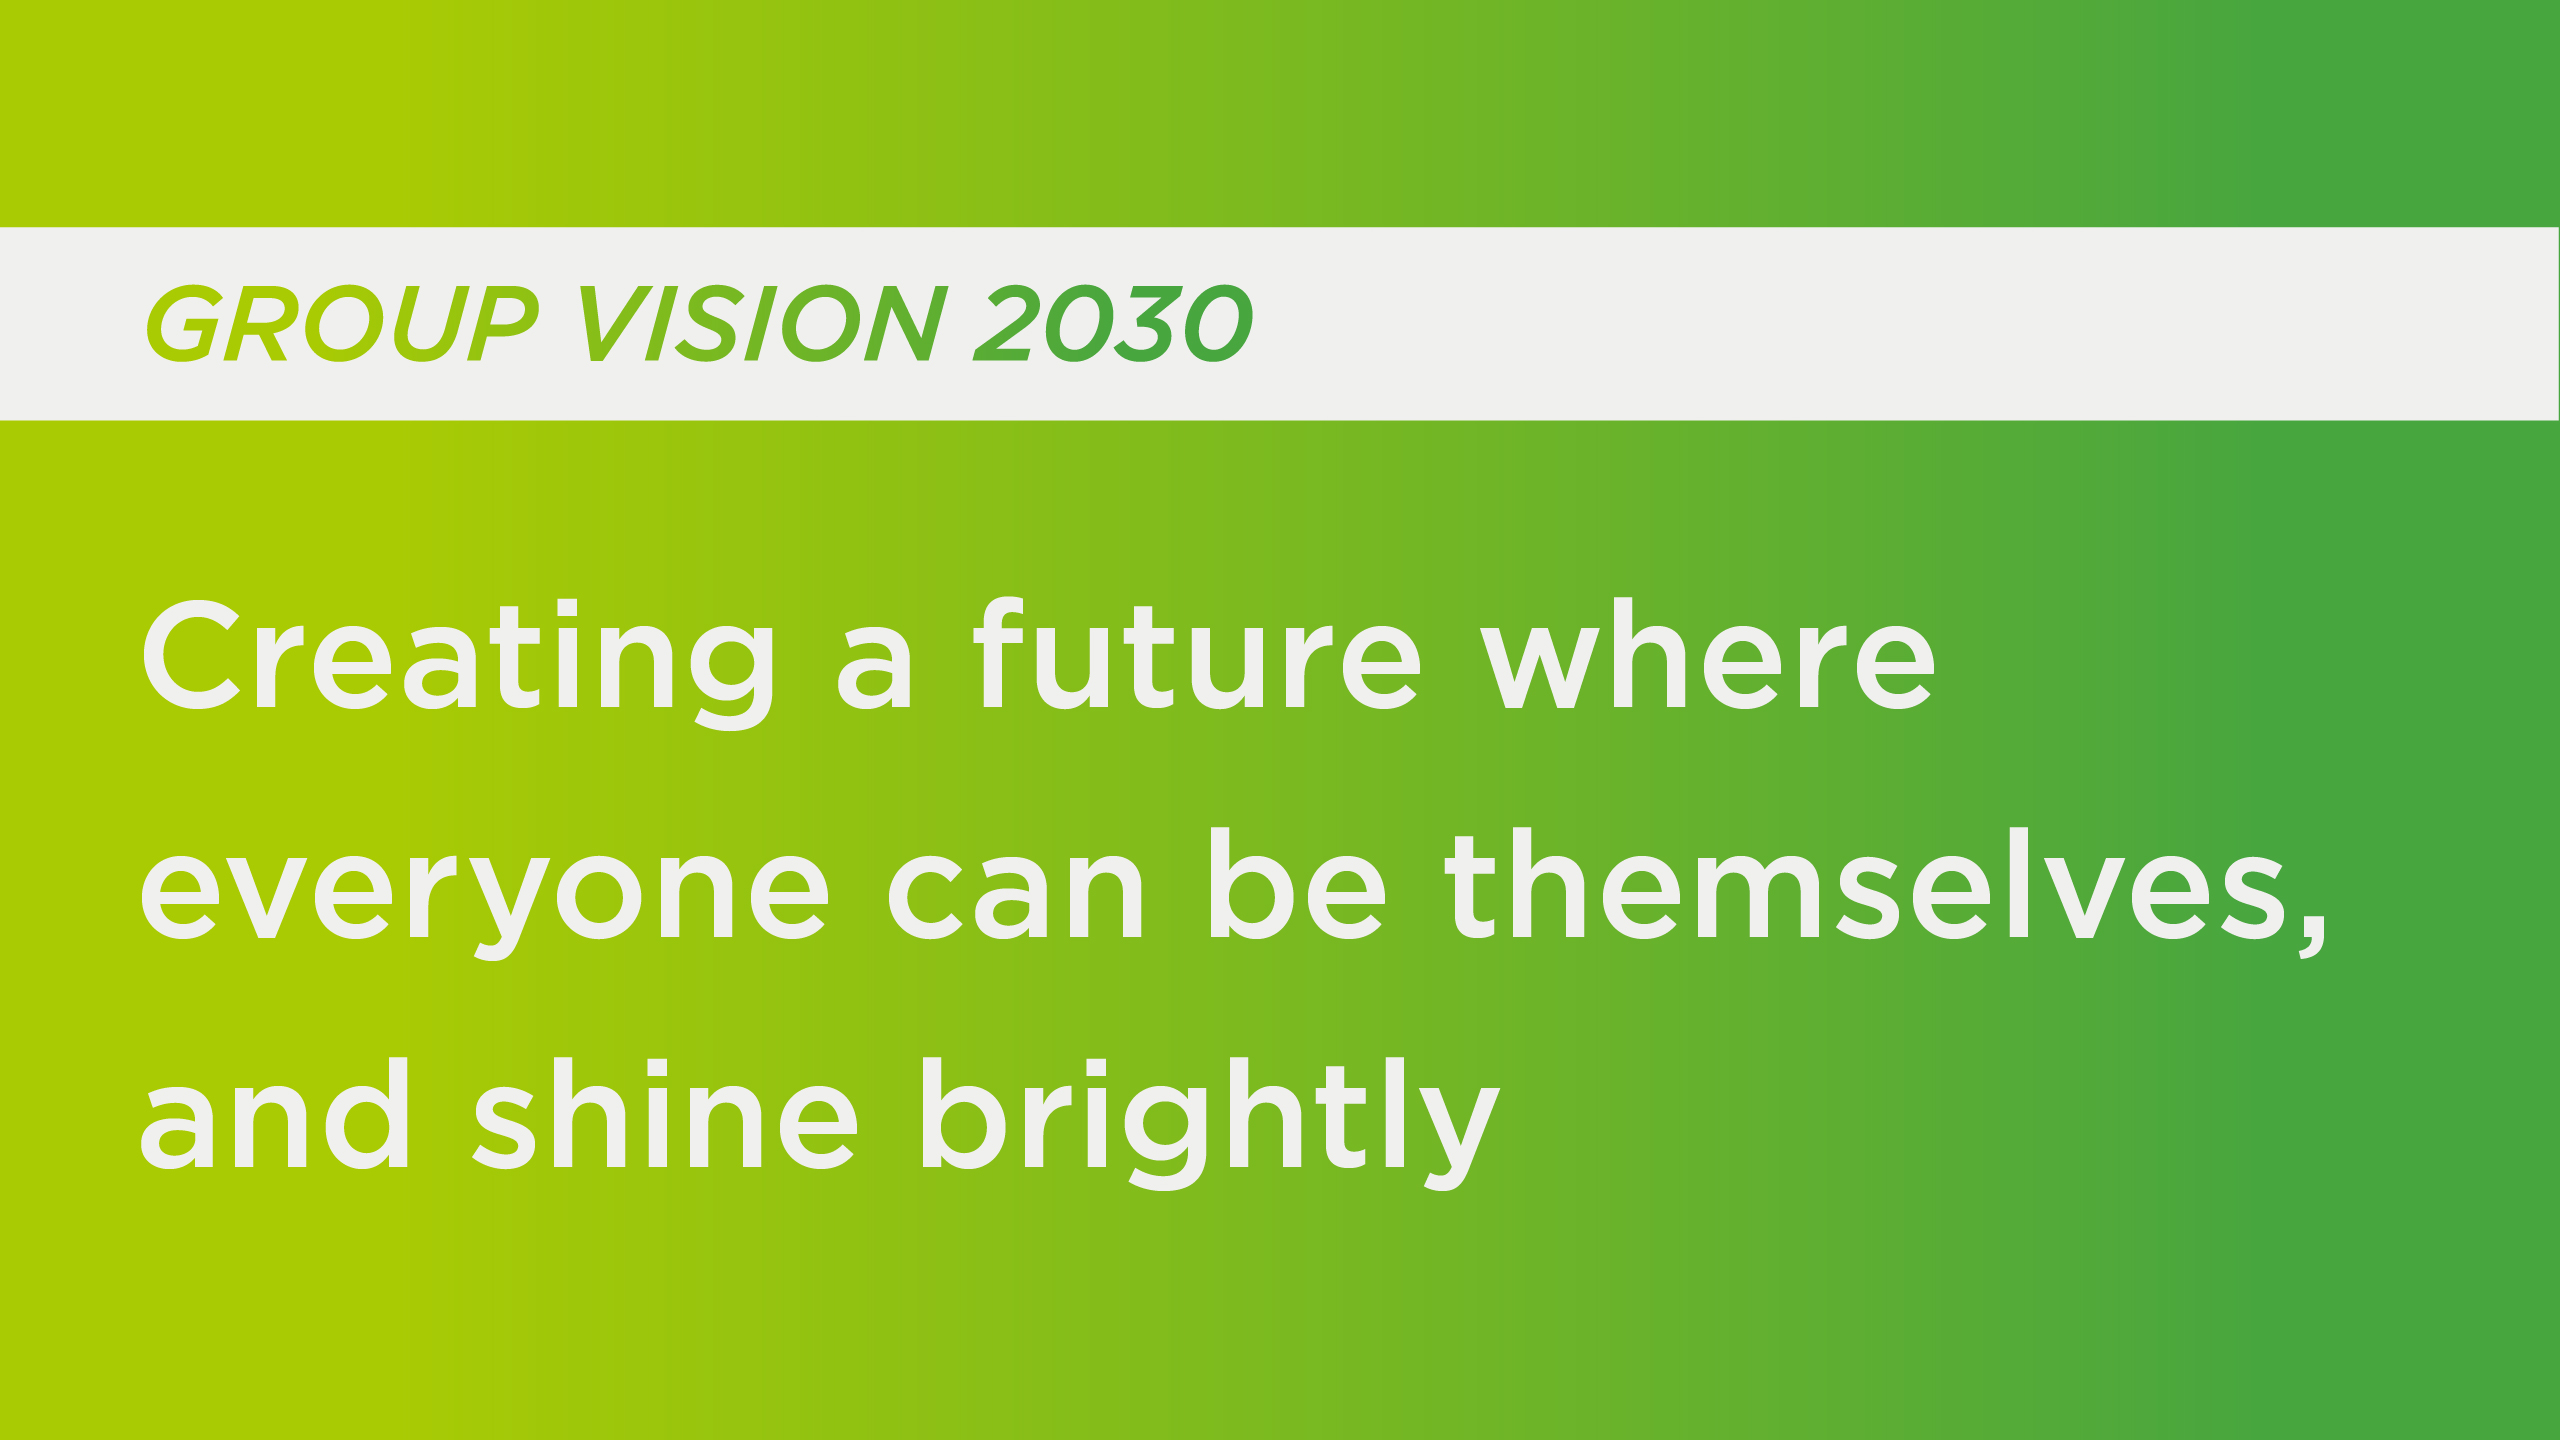 Long-Term Vision “GROUP VISION 2030”